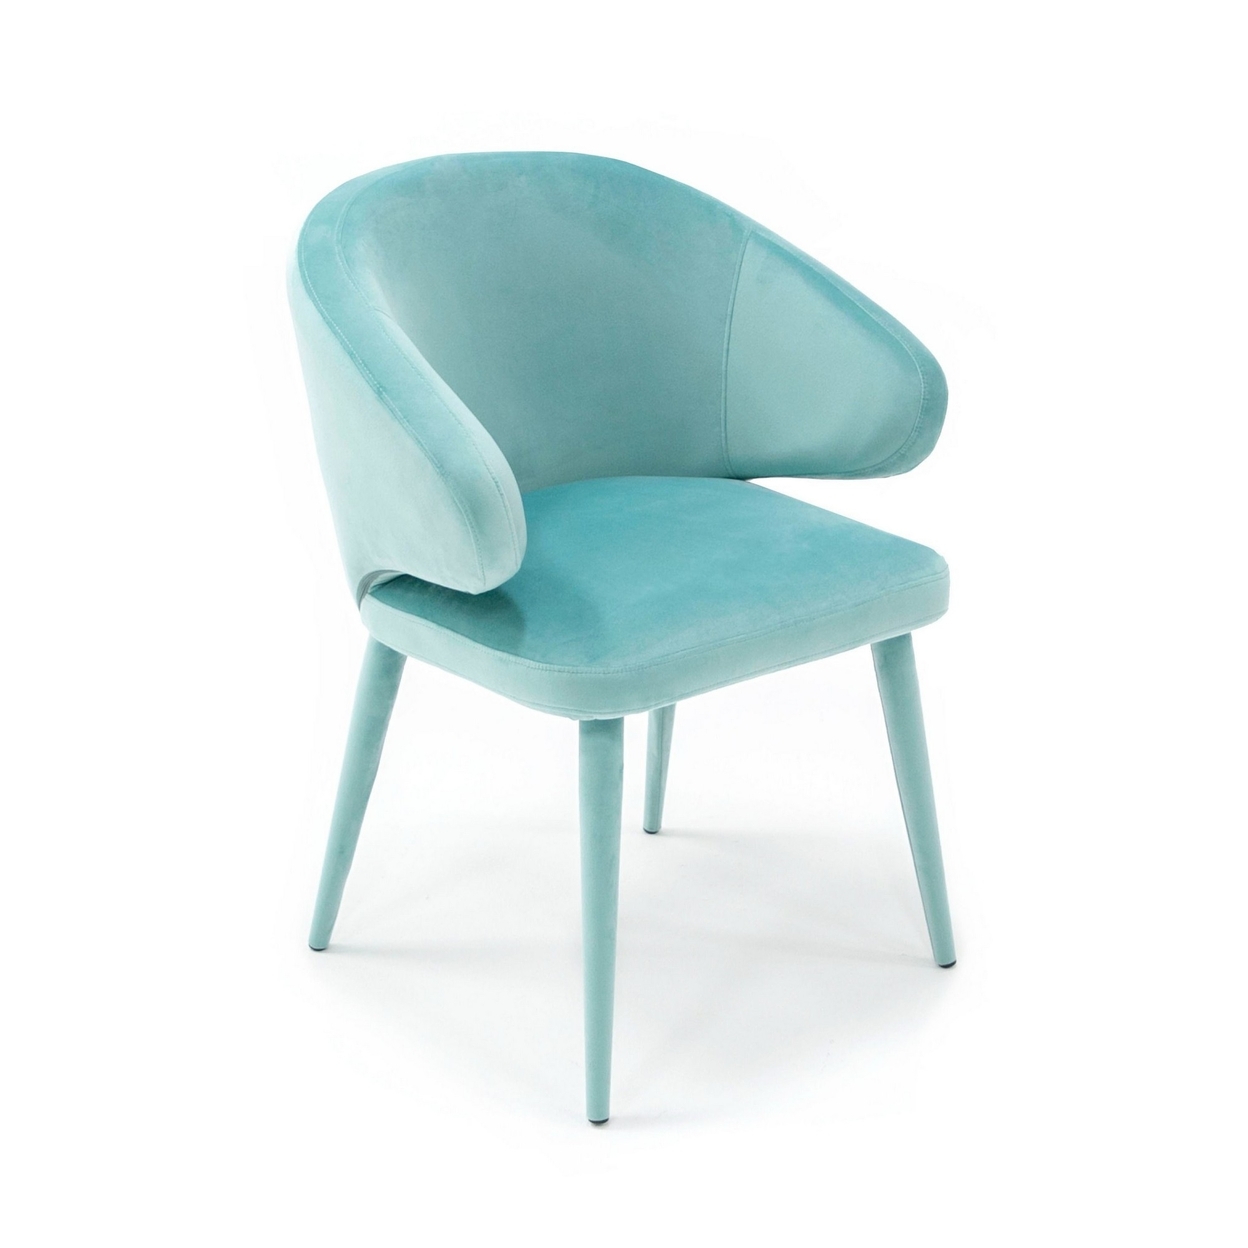 19 Inch Dining Chair, Fully Upholstered, Curved Back, Aqua Blue Velour- Saltoro Sherpi